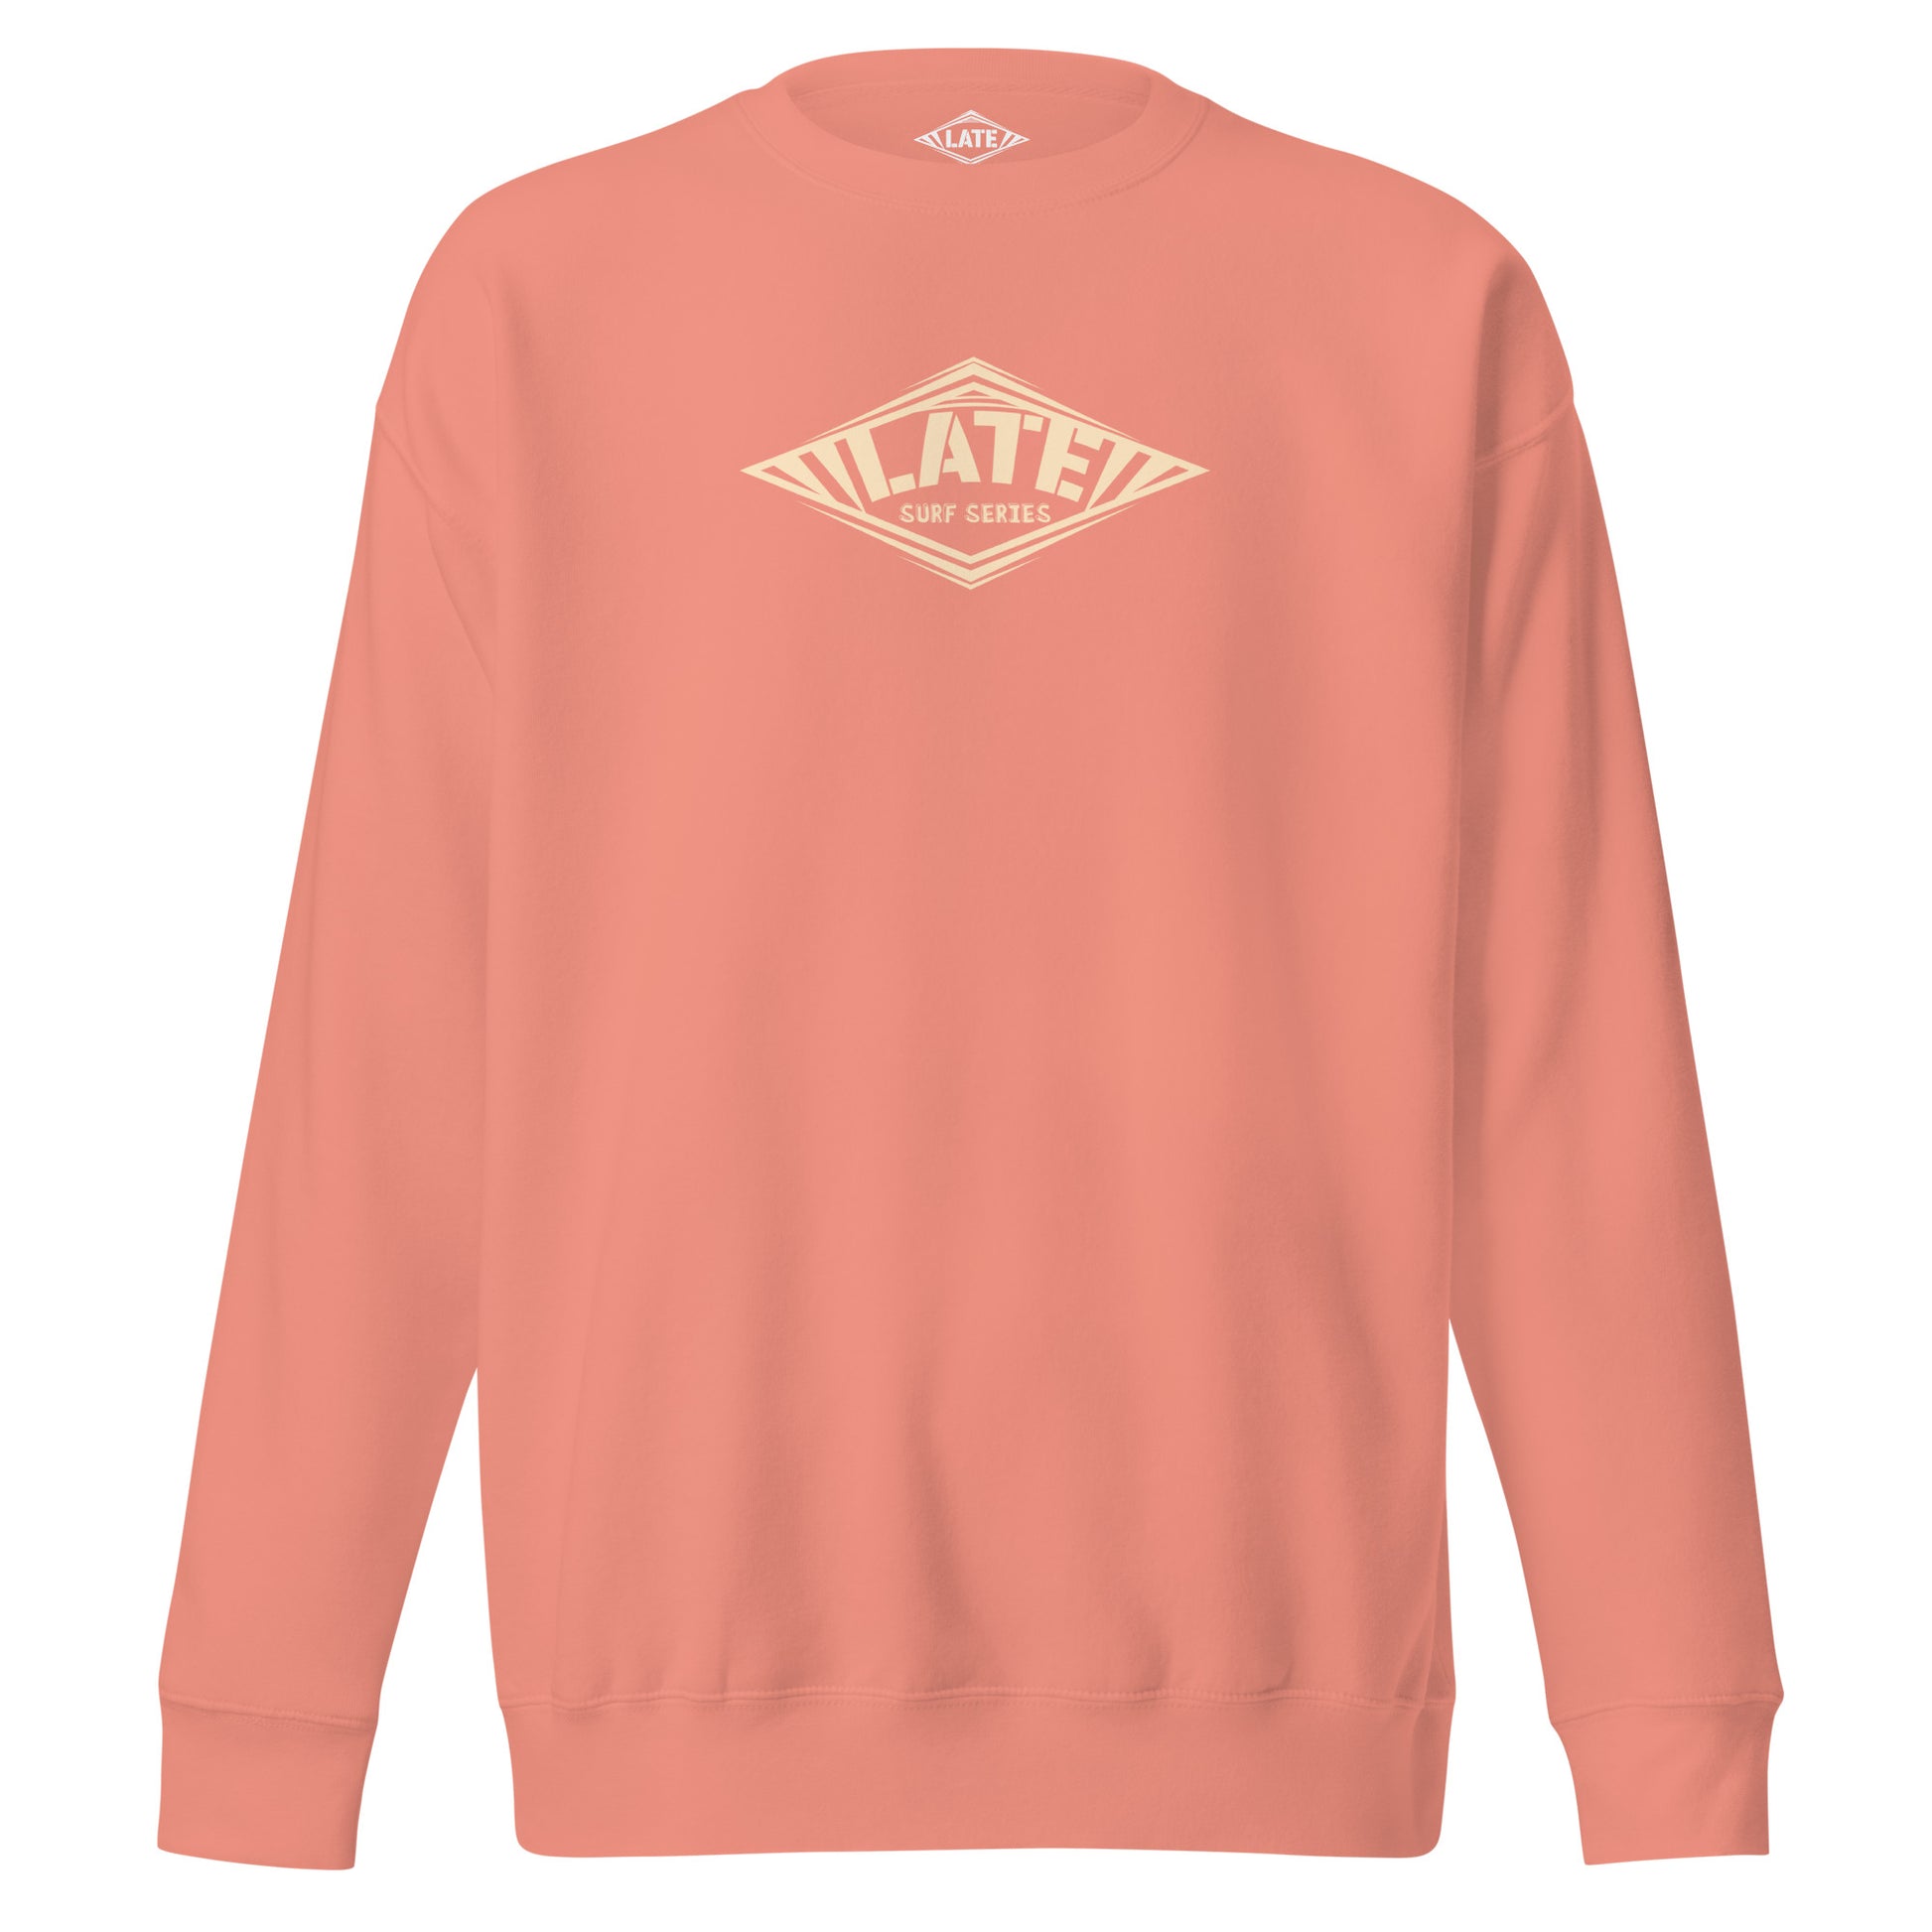 Sweatshirt Take On The Elements surf series logo Late sweat unisex rose